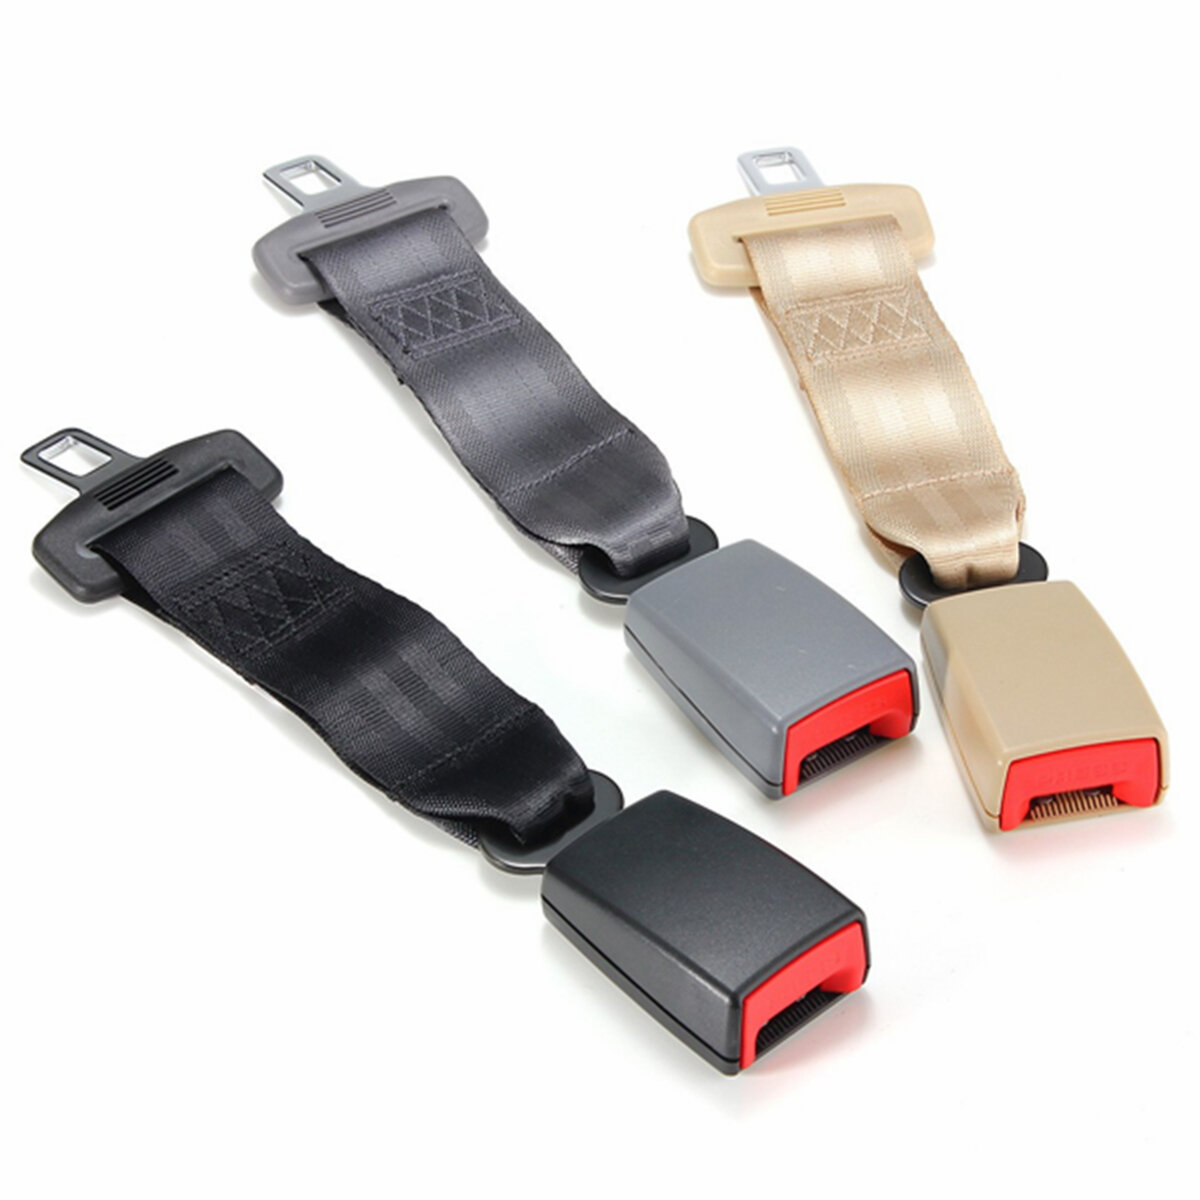 1x Universal Car Seat Seatbelt Adjustable Safety Belt Extender Extension Buckle